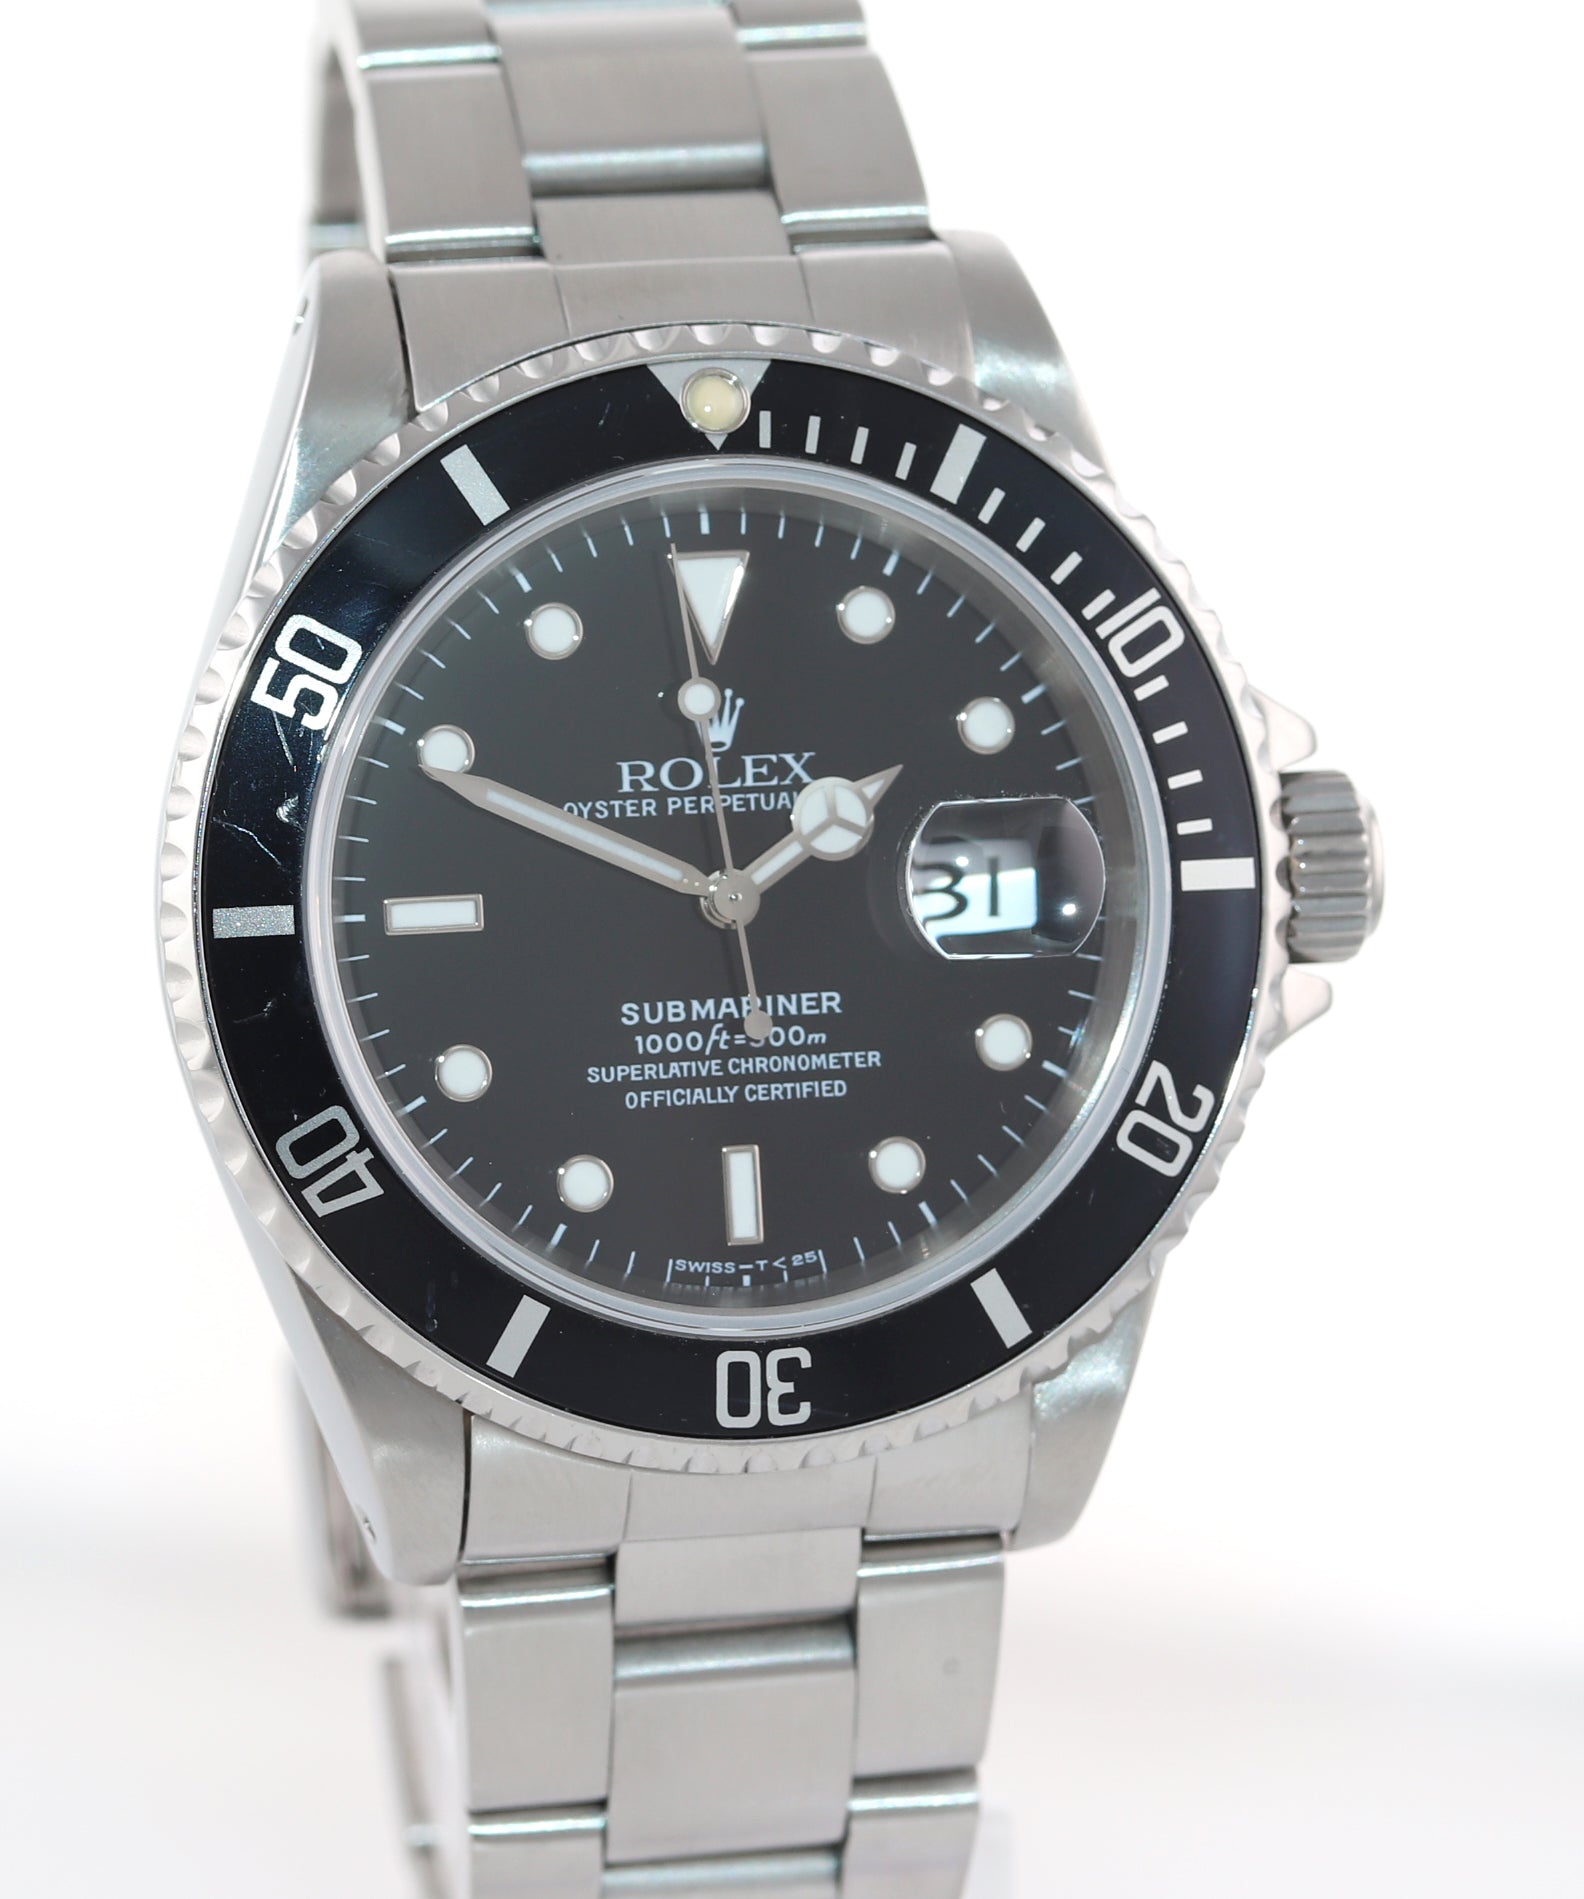 PAPERS TRITIUM DIAL Rolex Submariner Date 16610 Steel Black 40mm Watch Box